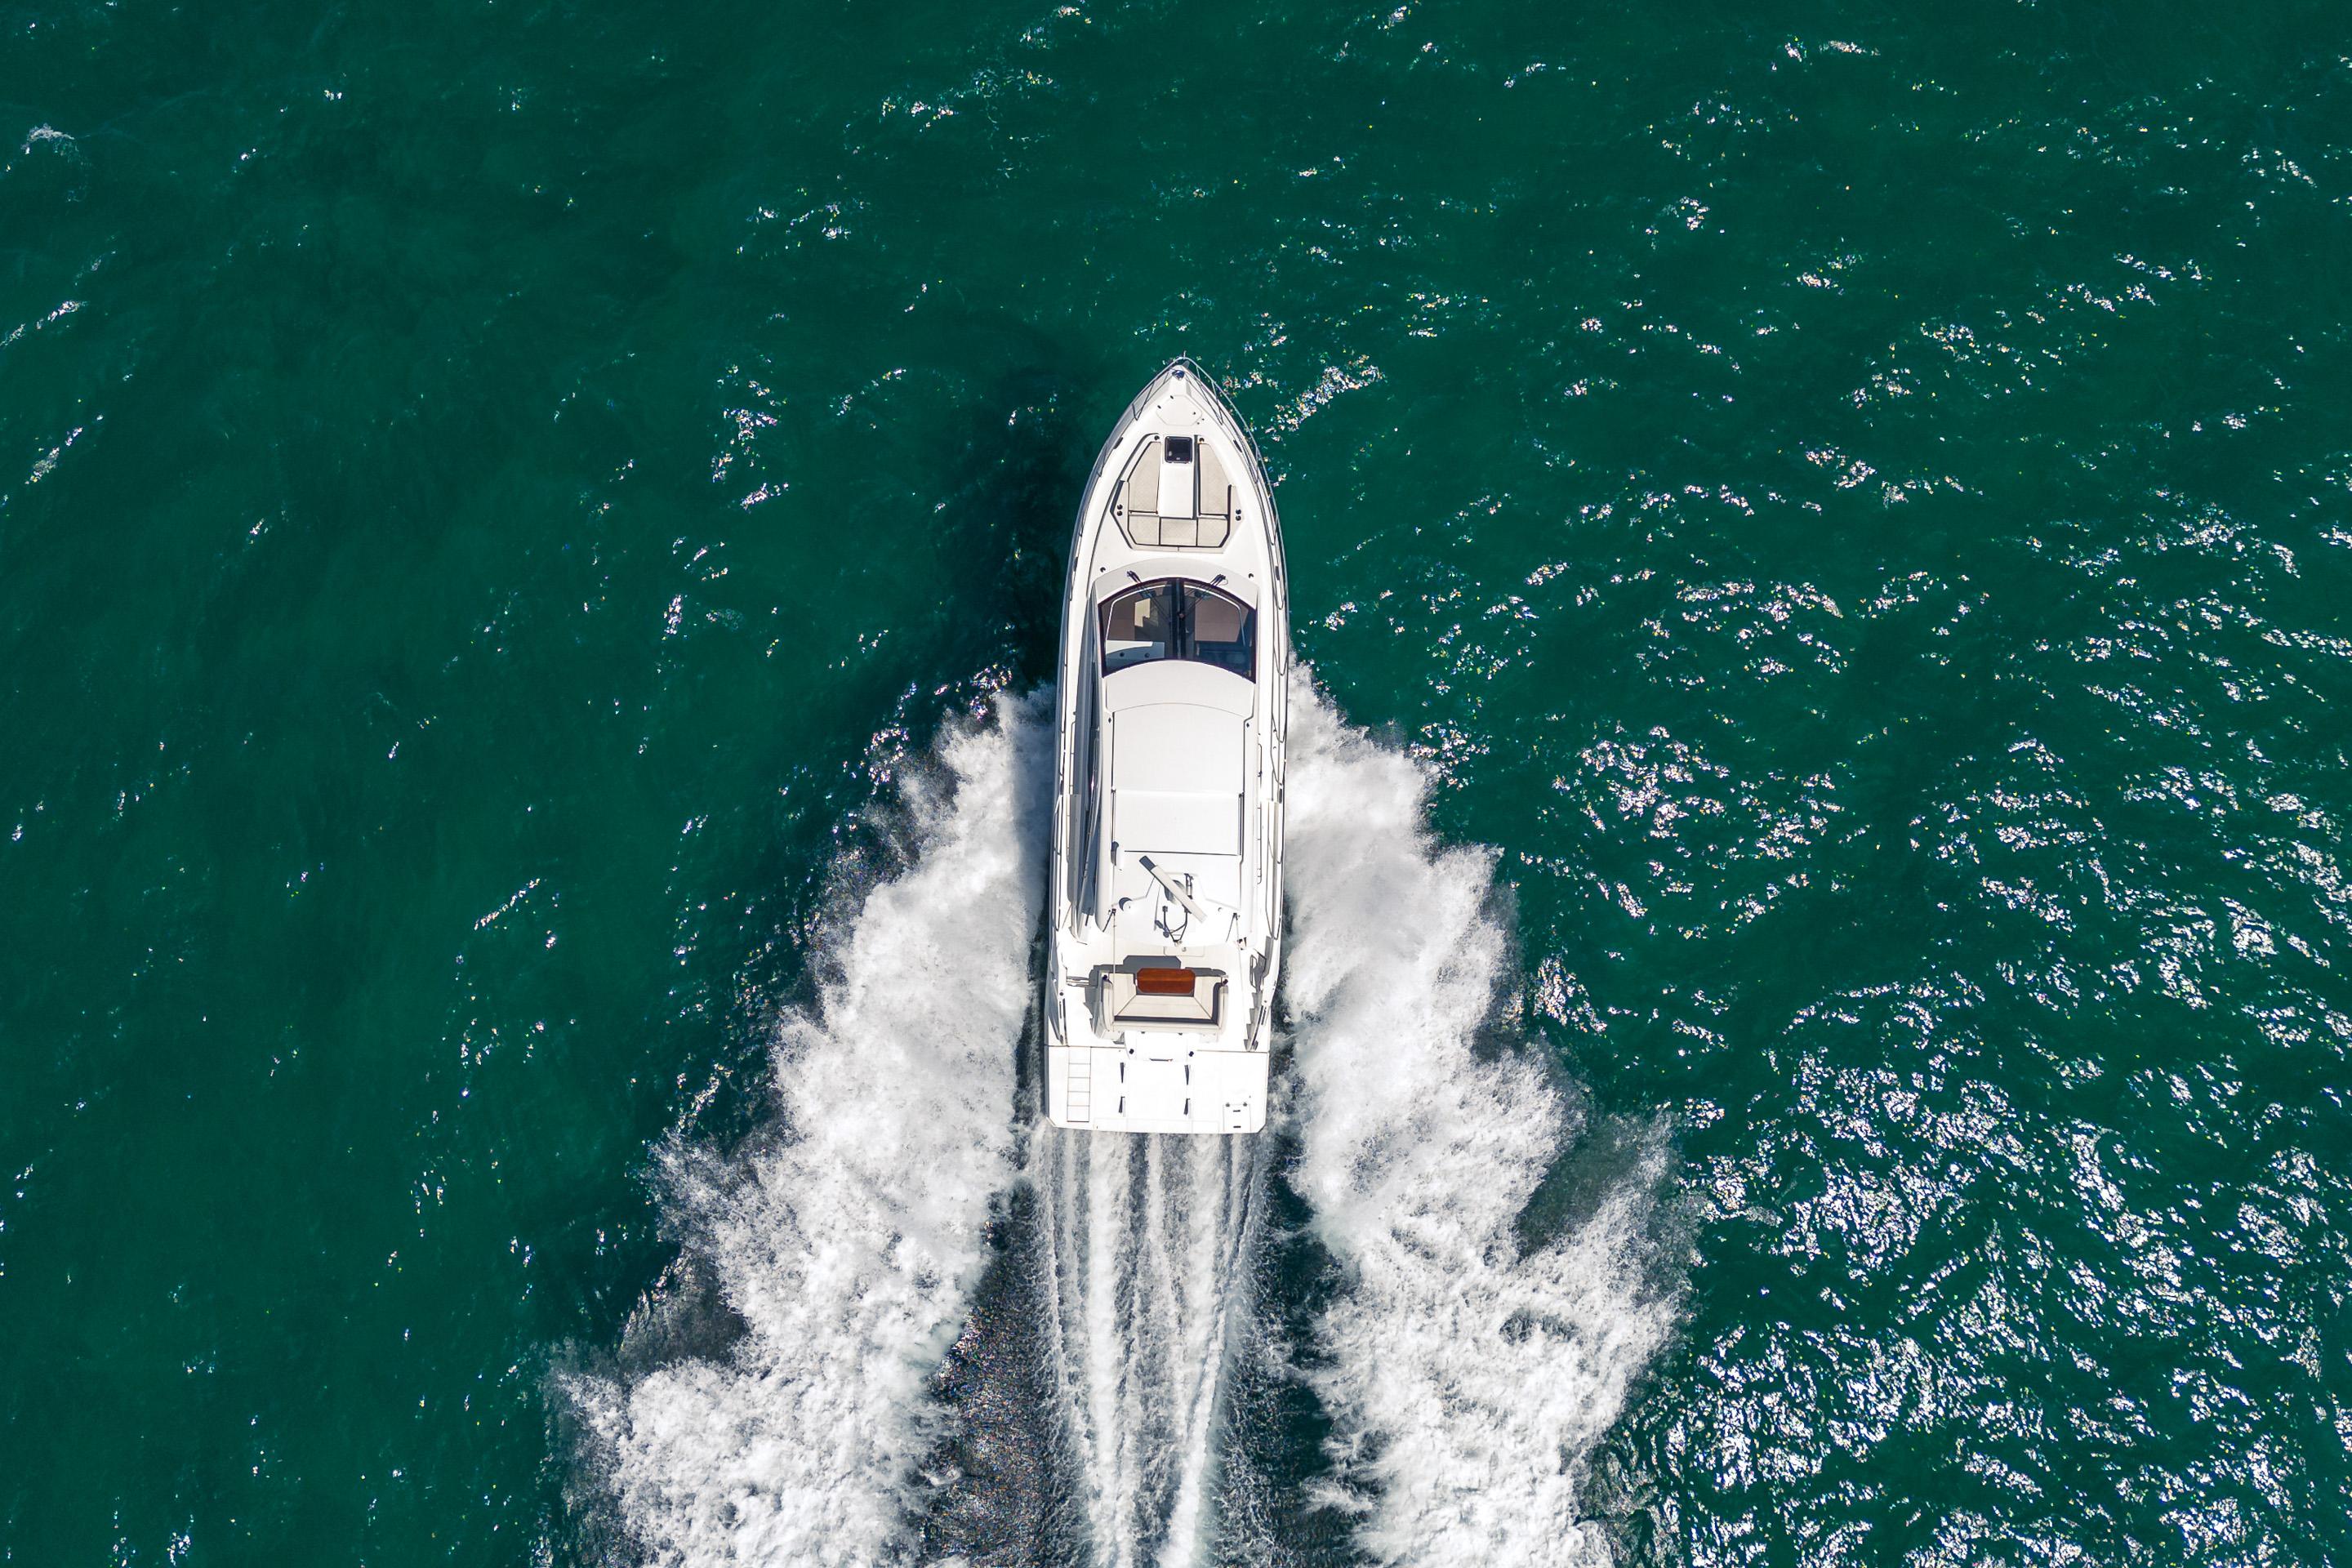 2019 Cruisers Yachts Cantius